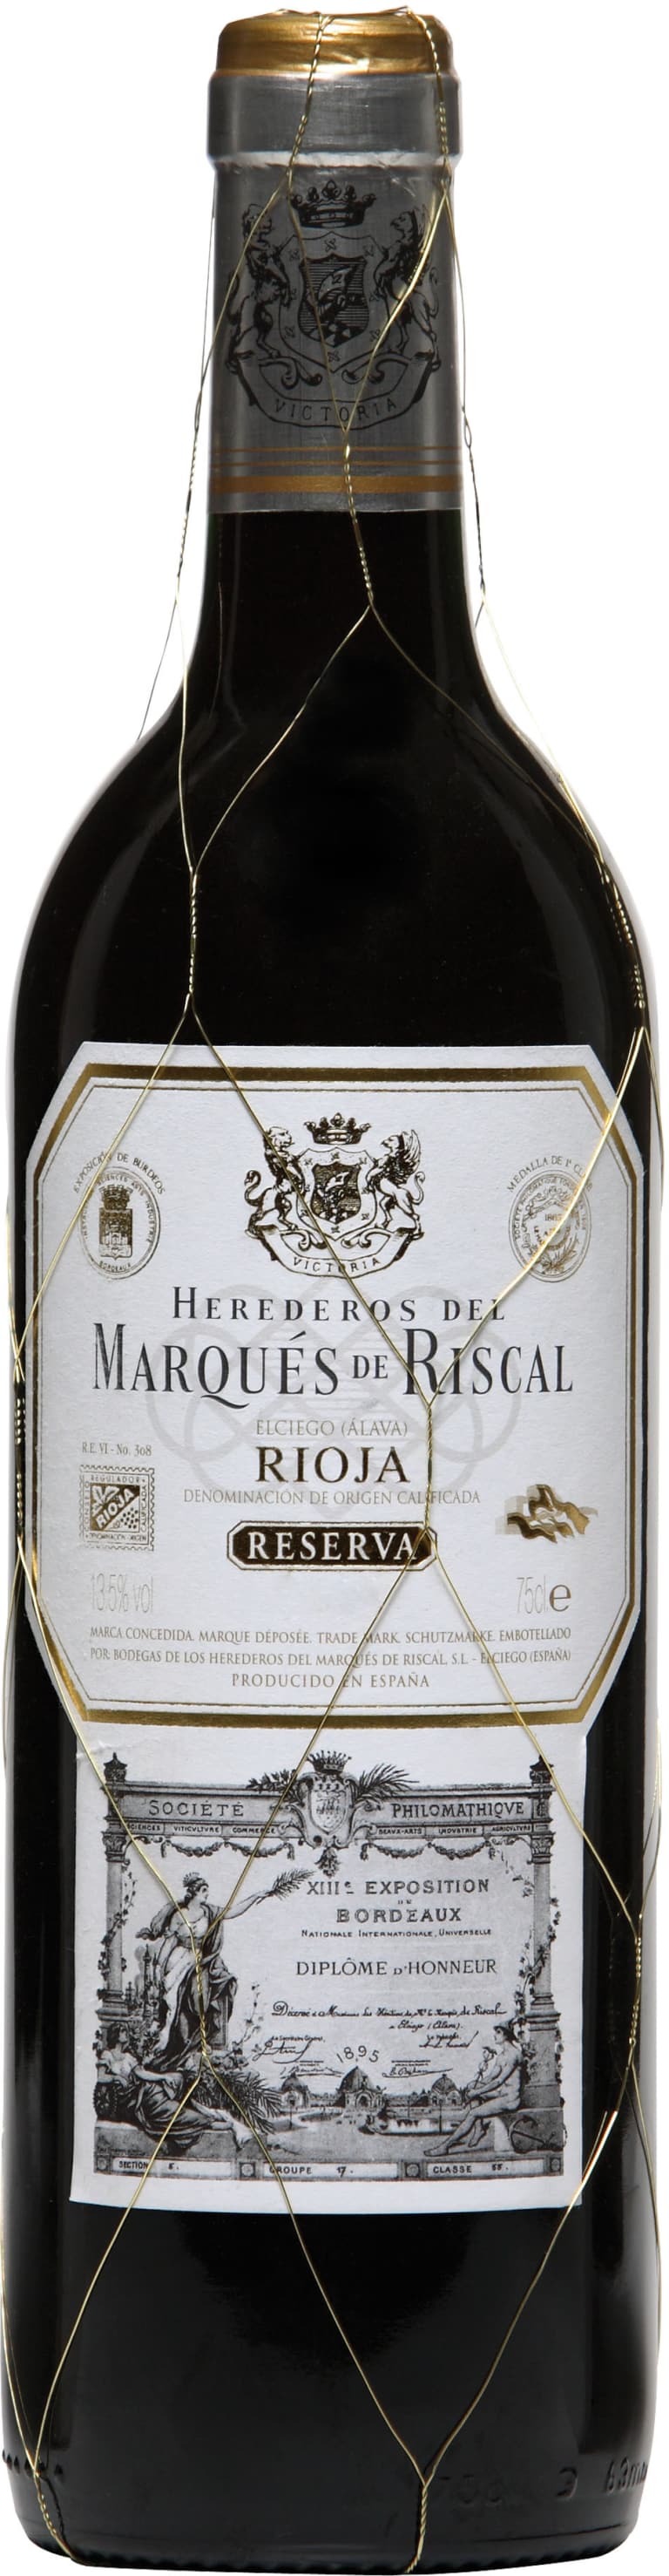 Marques de Riscal Rioja Reserva 2013